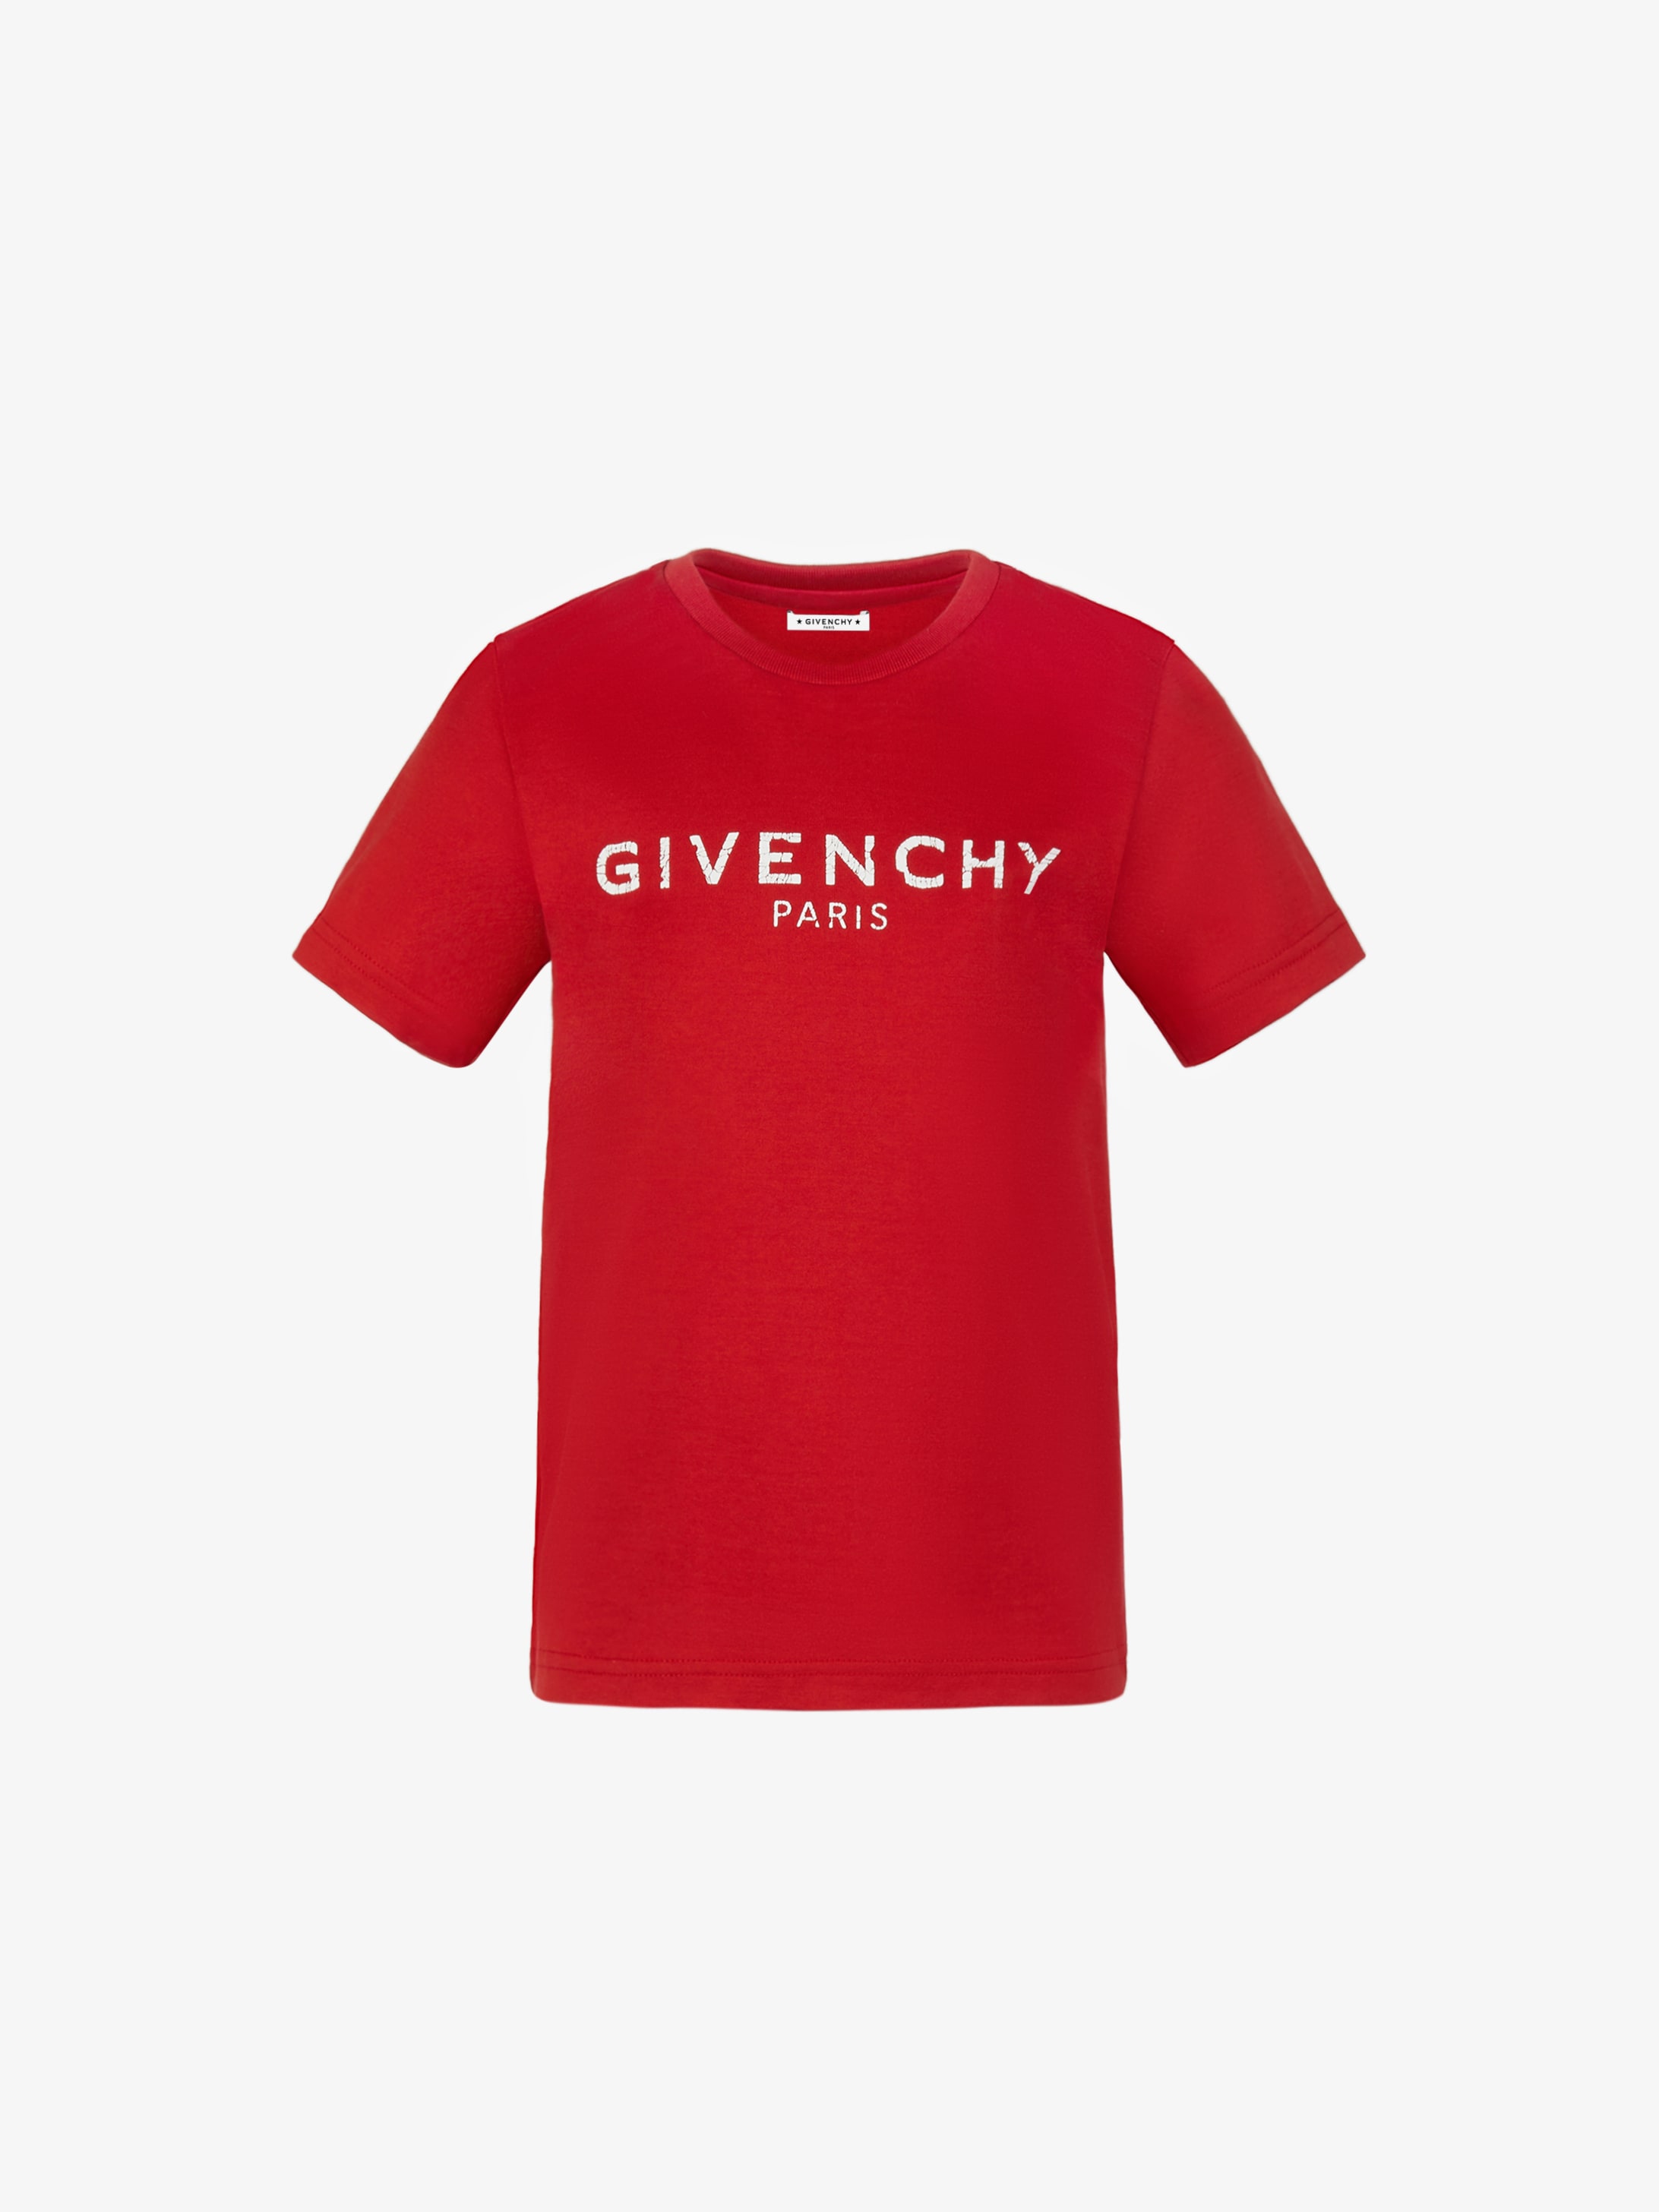 givenchy paris t shirt red